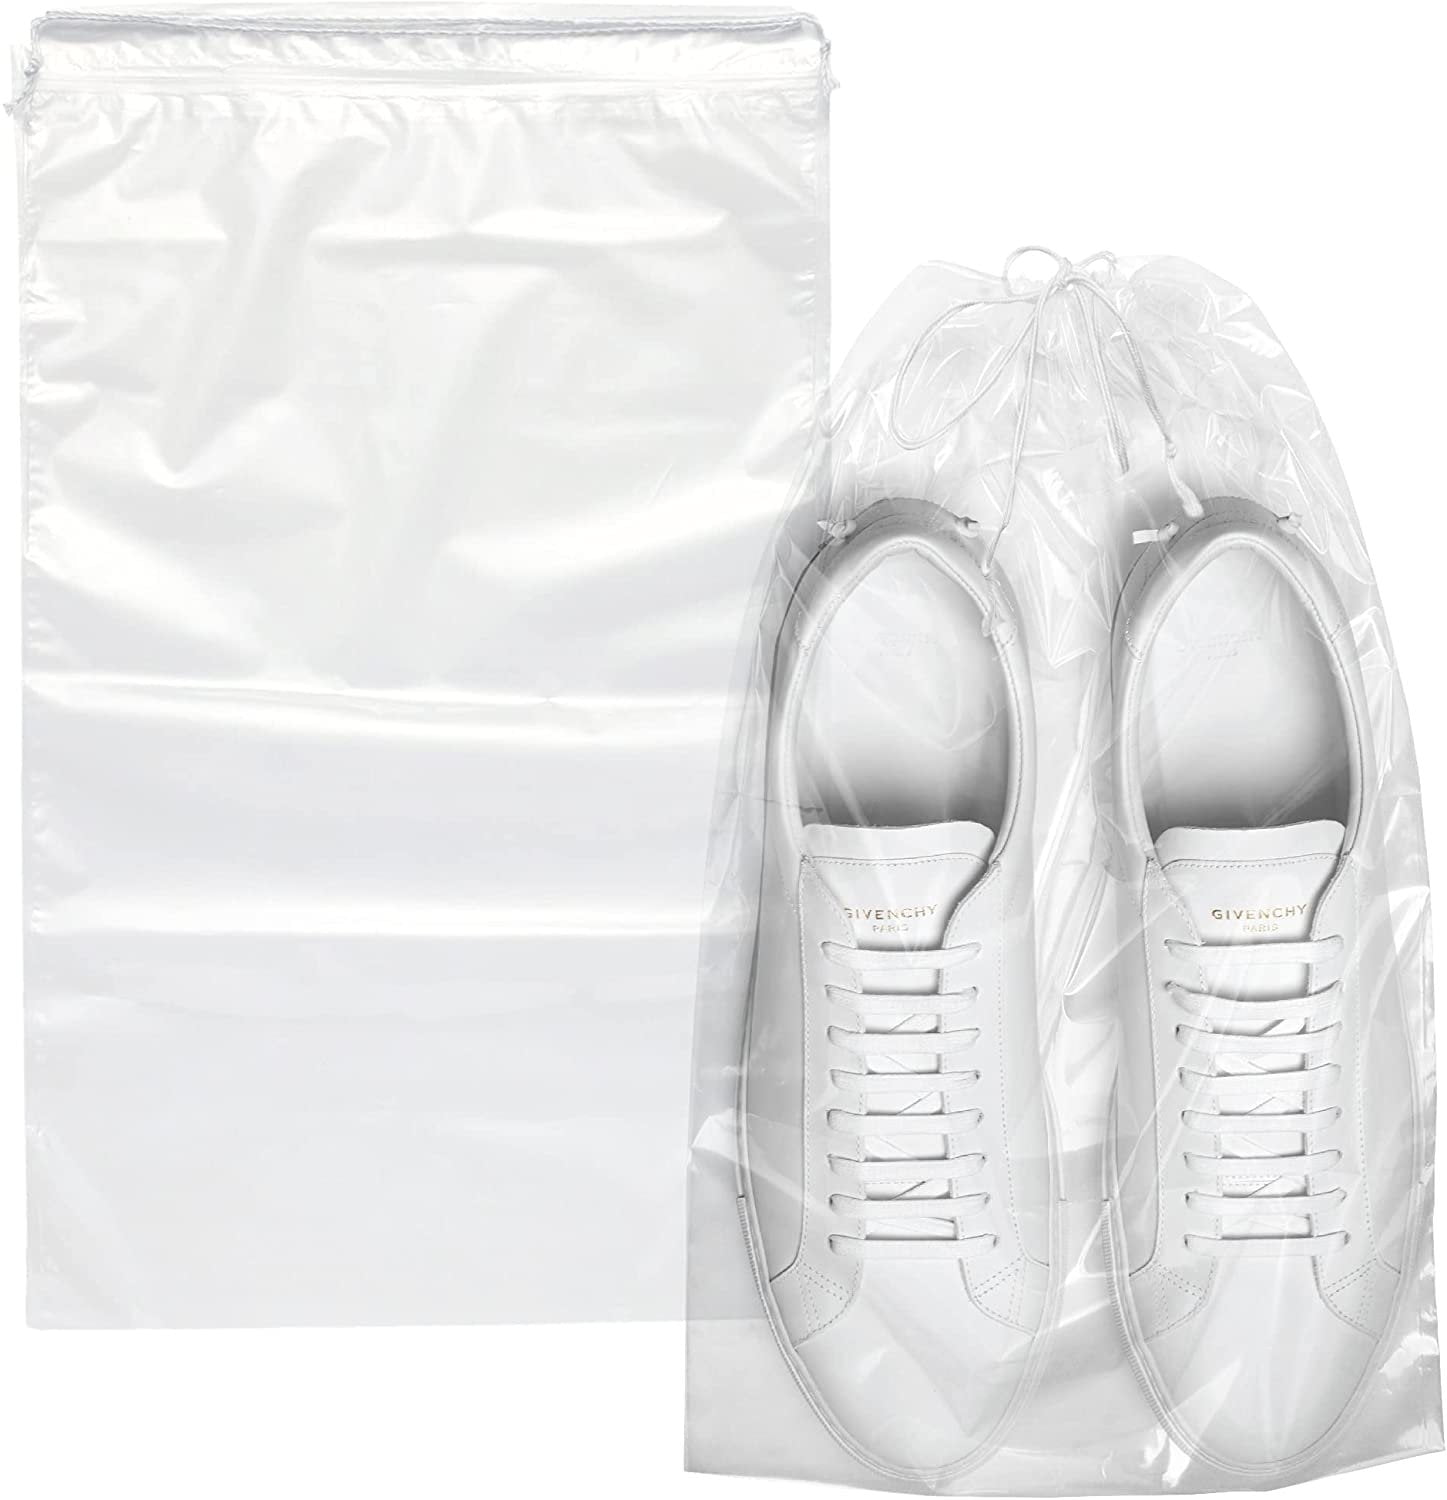 Portable Non-Woven Drawstring Large Shoes Storage Bag Clear Window Shoes Pouch Organizers Black Unaone 8 PCS Travel Shoe Bag 